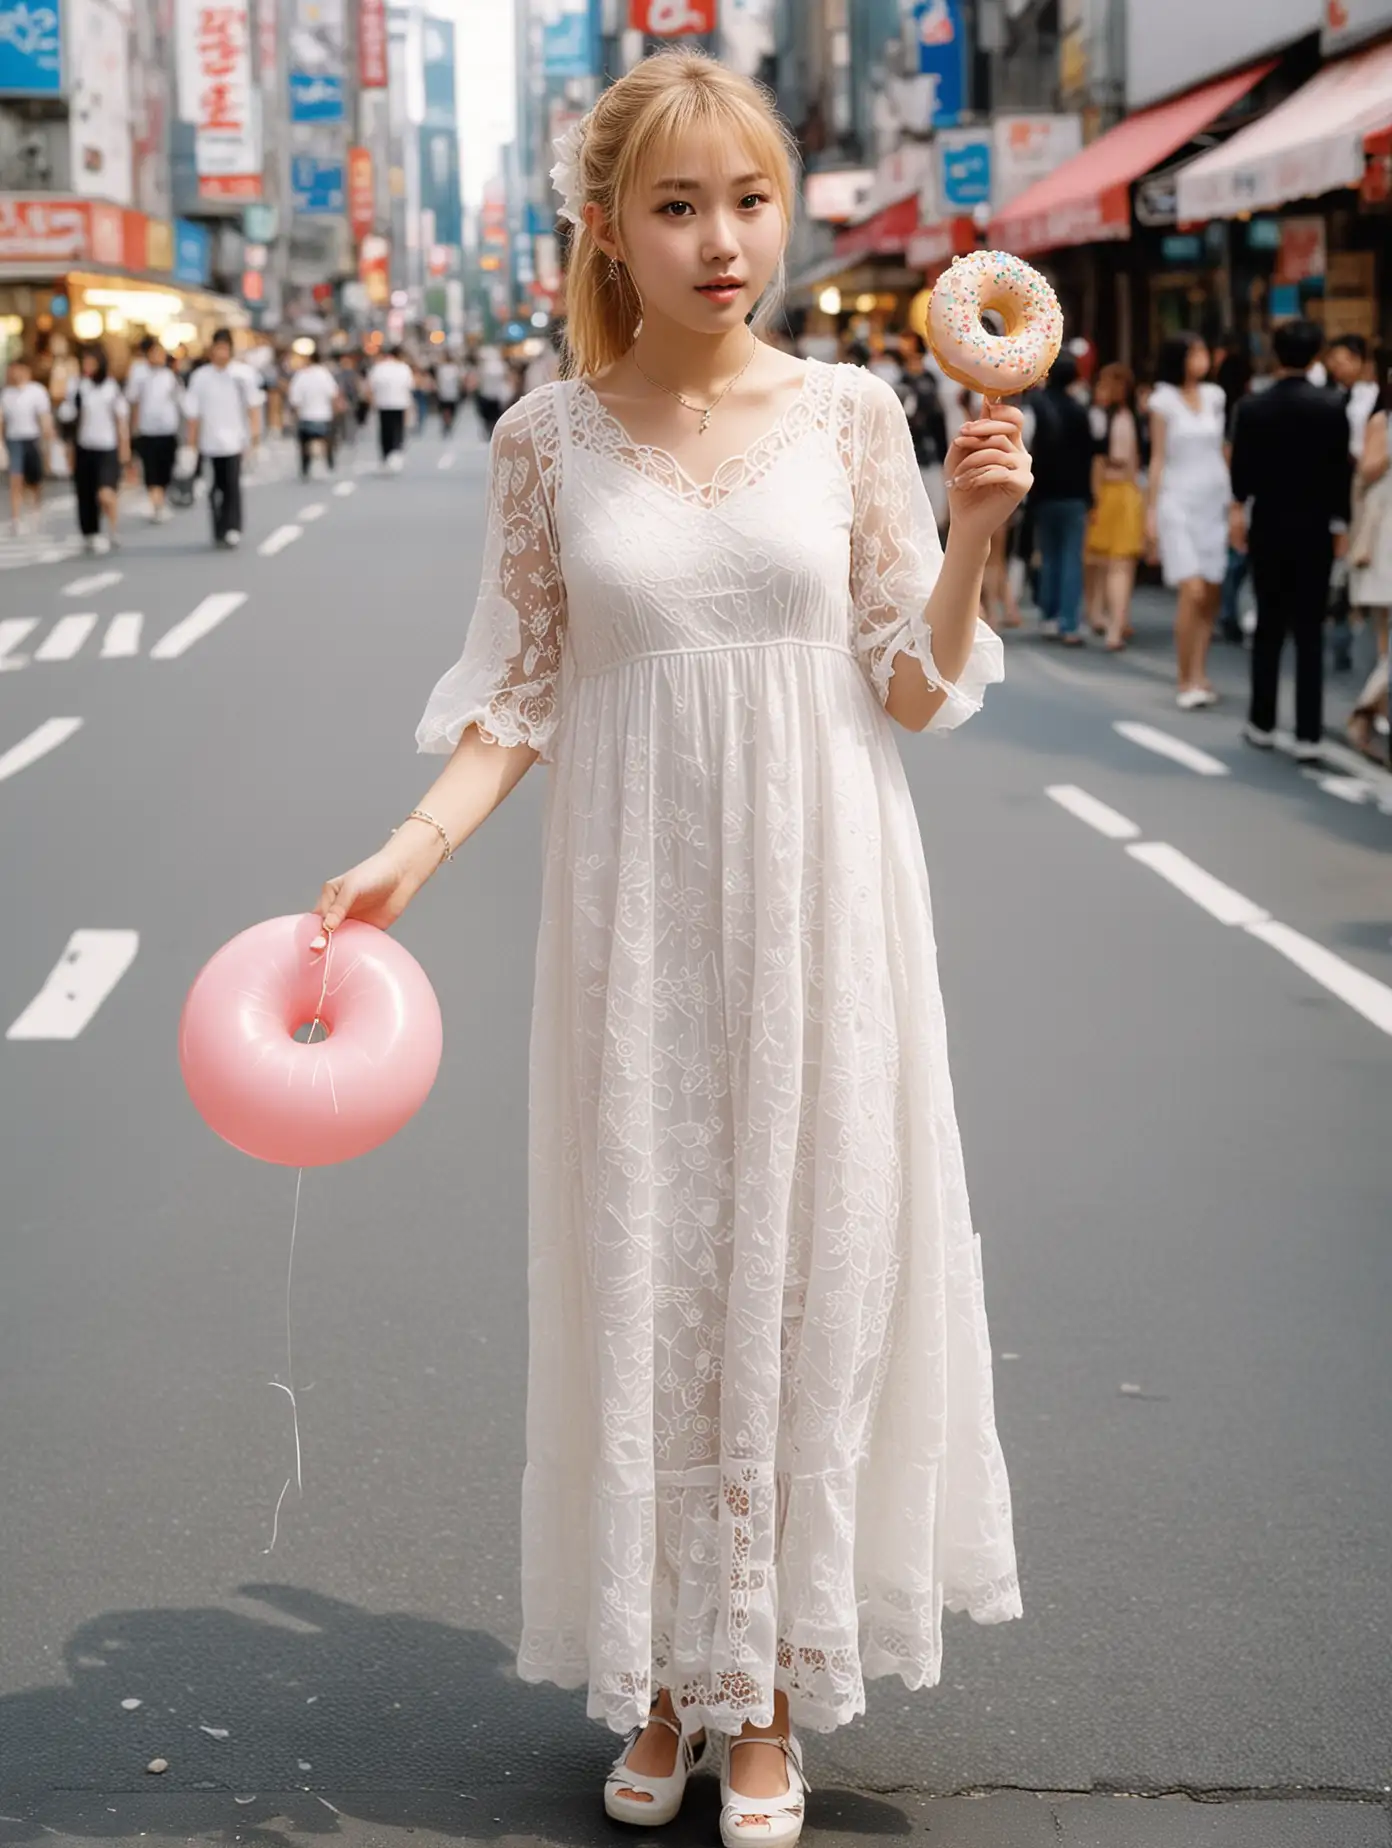 Japanese Teenager Street Fashion Kawaii Style with Donut and Balloon